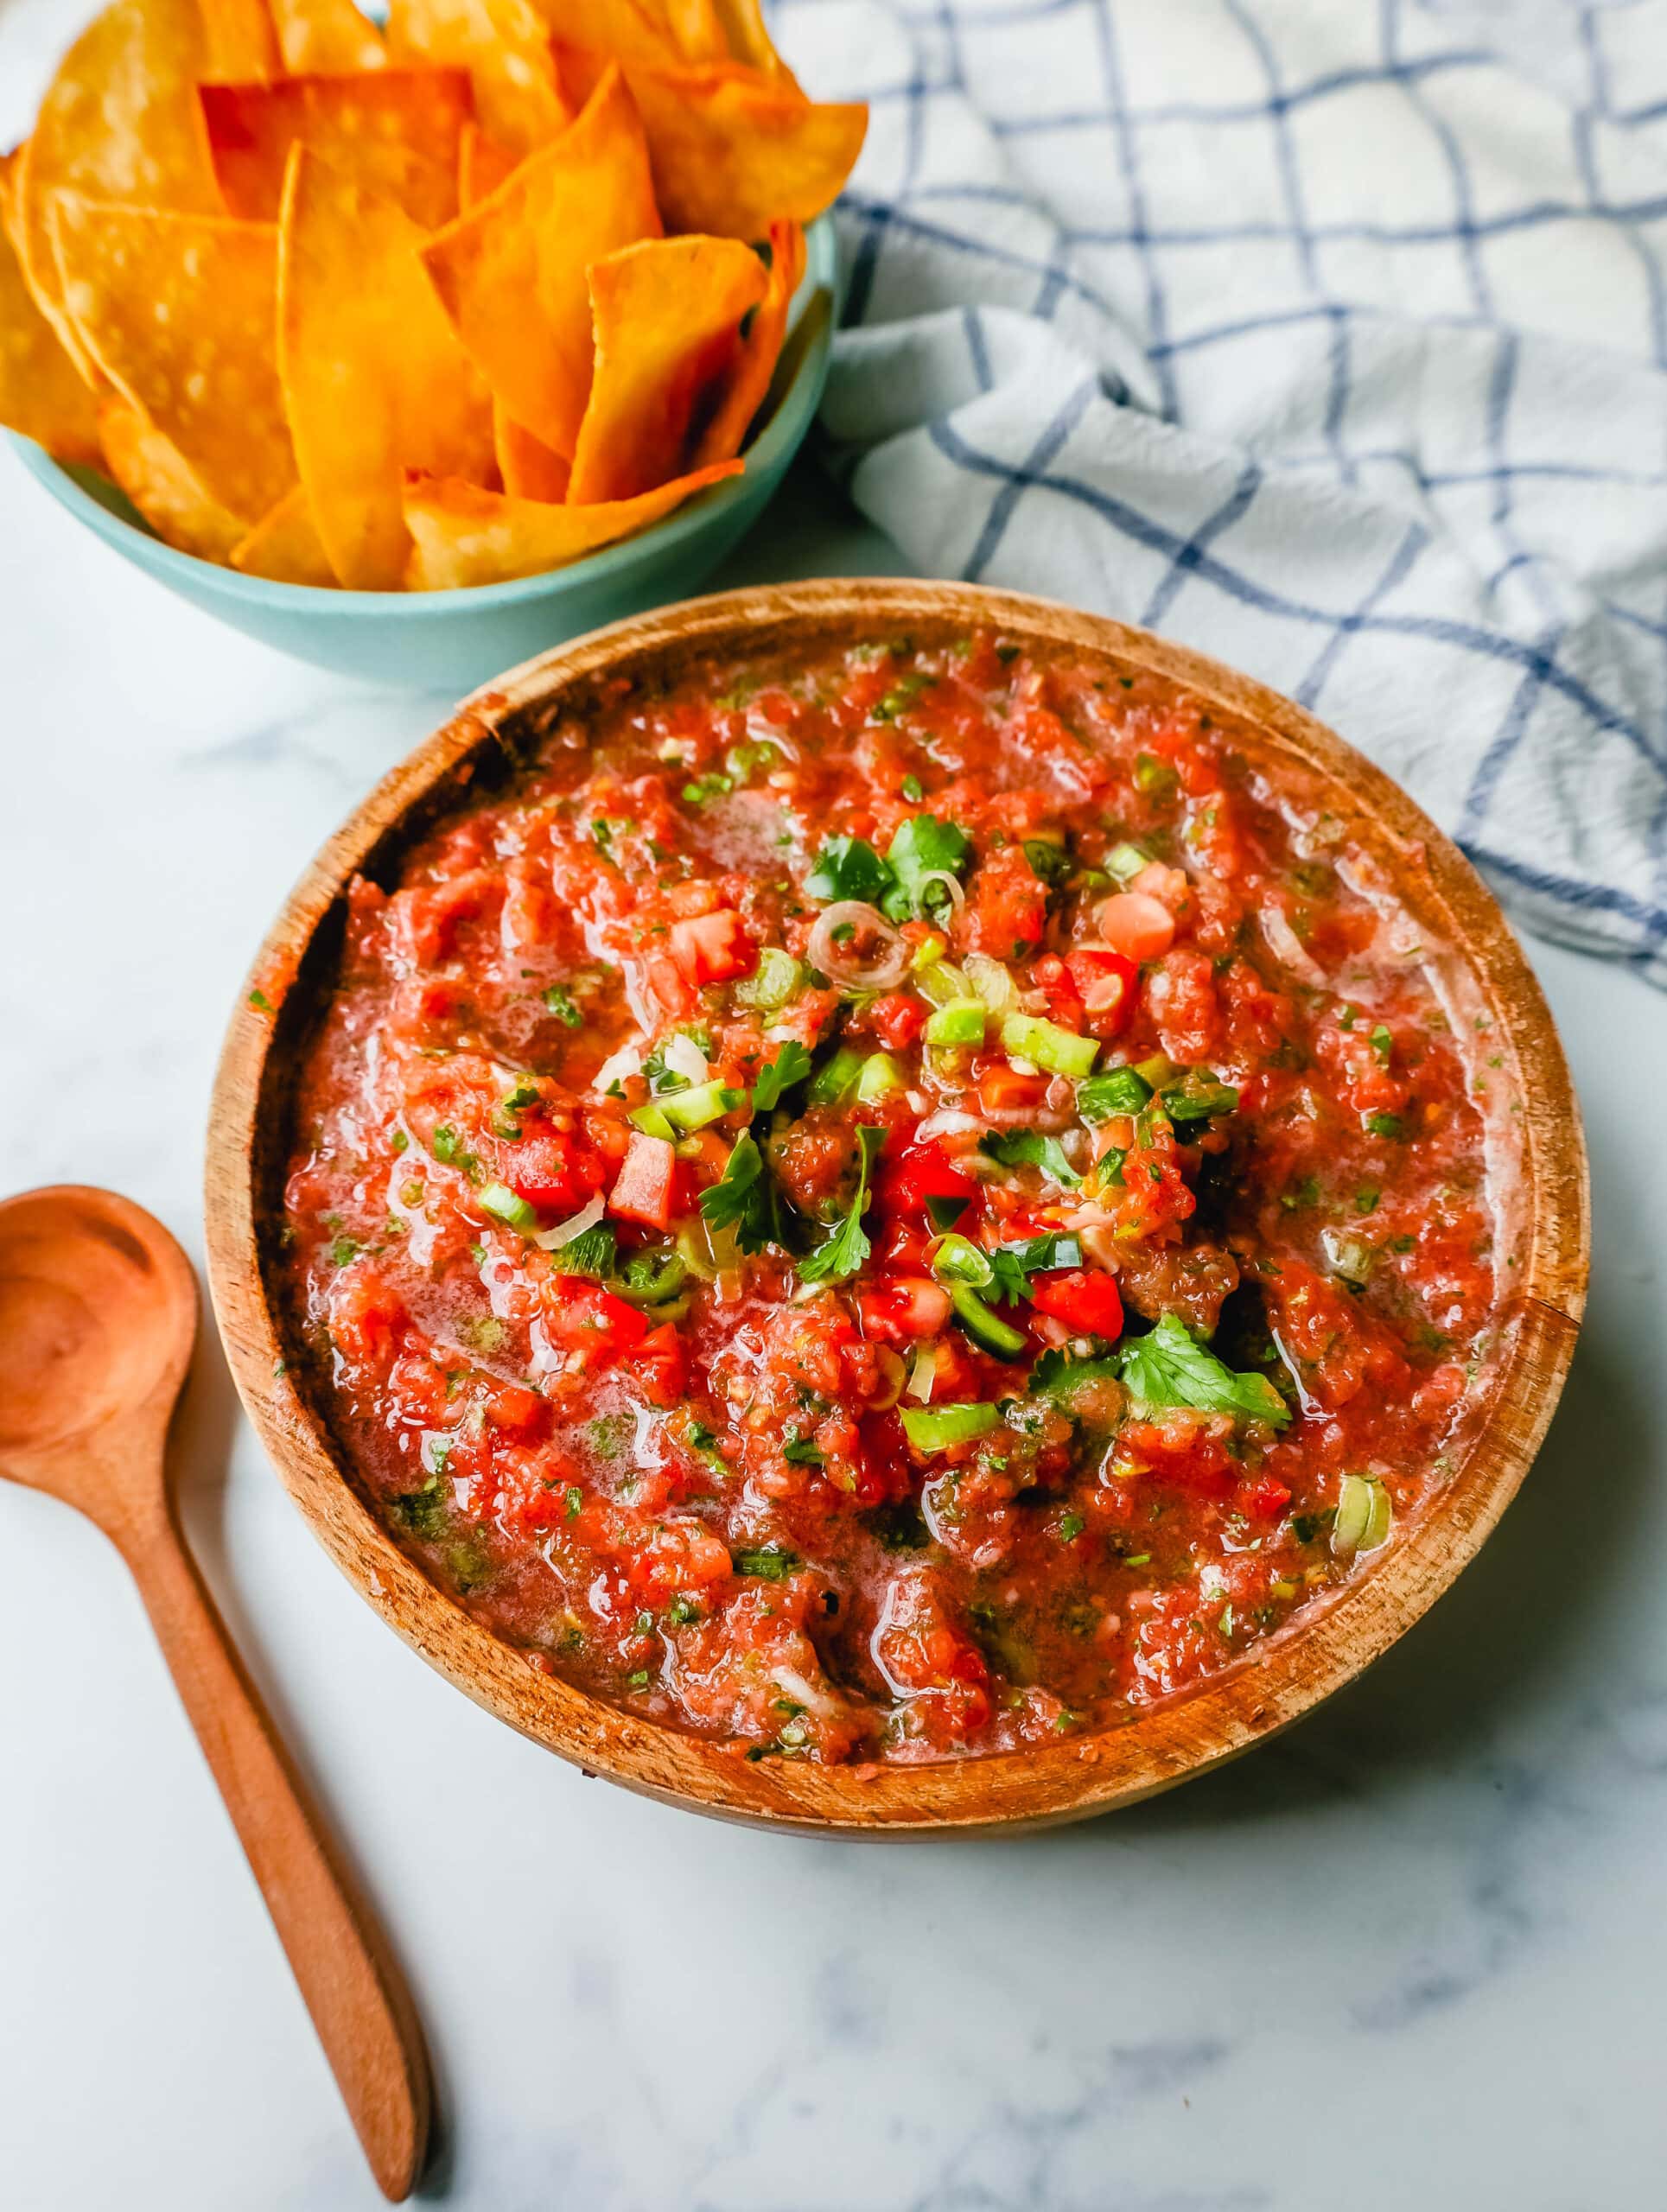 Tomato Salsa Dip Recipe - How to make Tomato Salsa